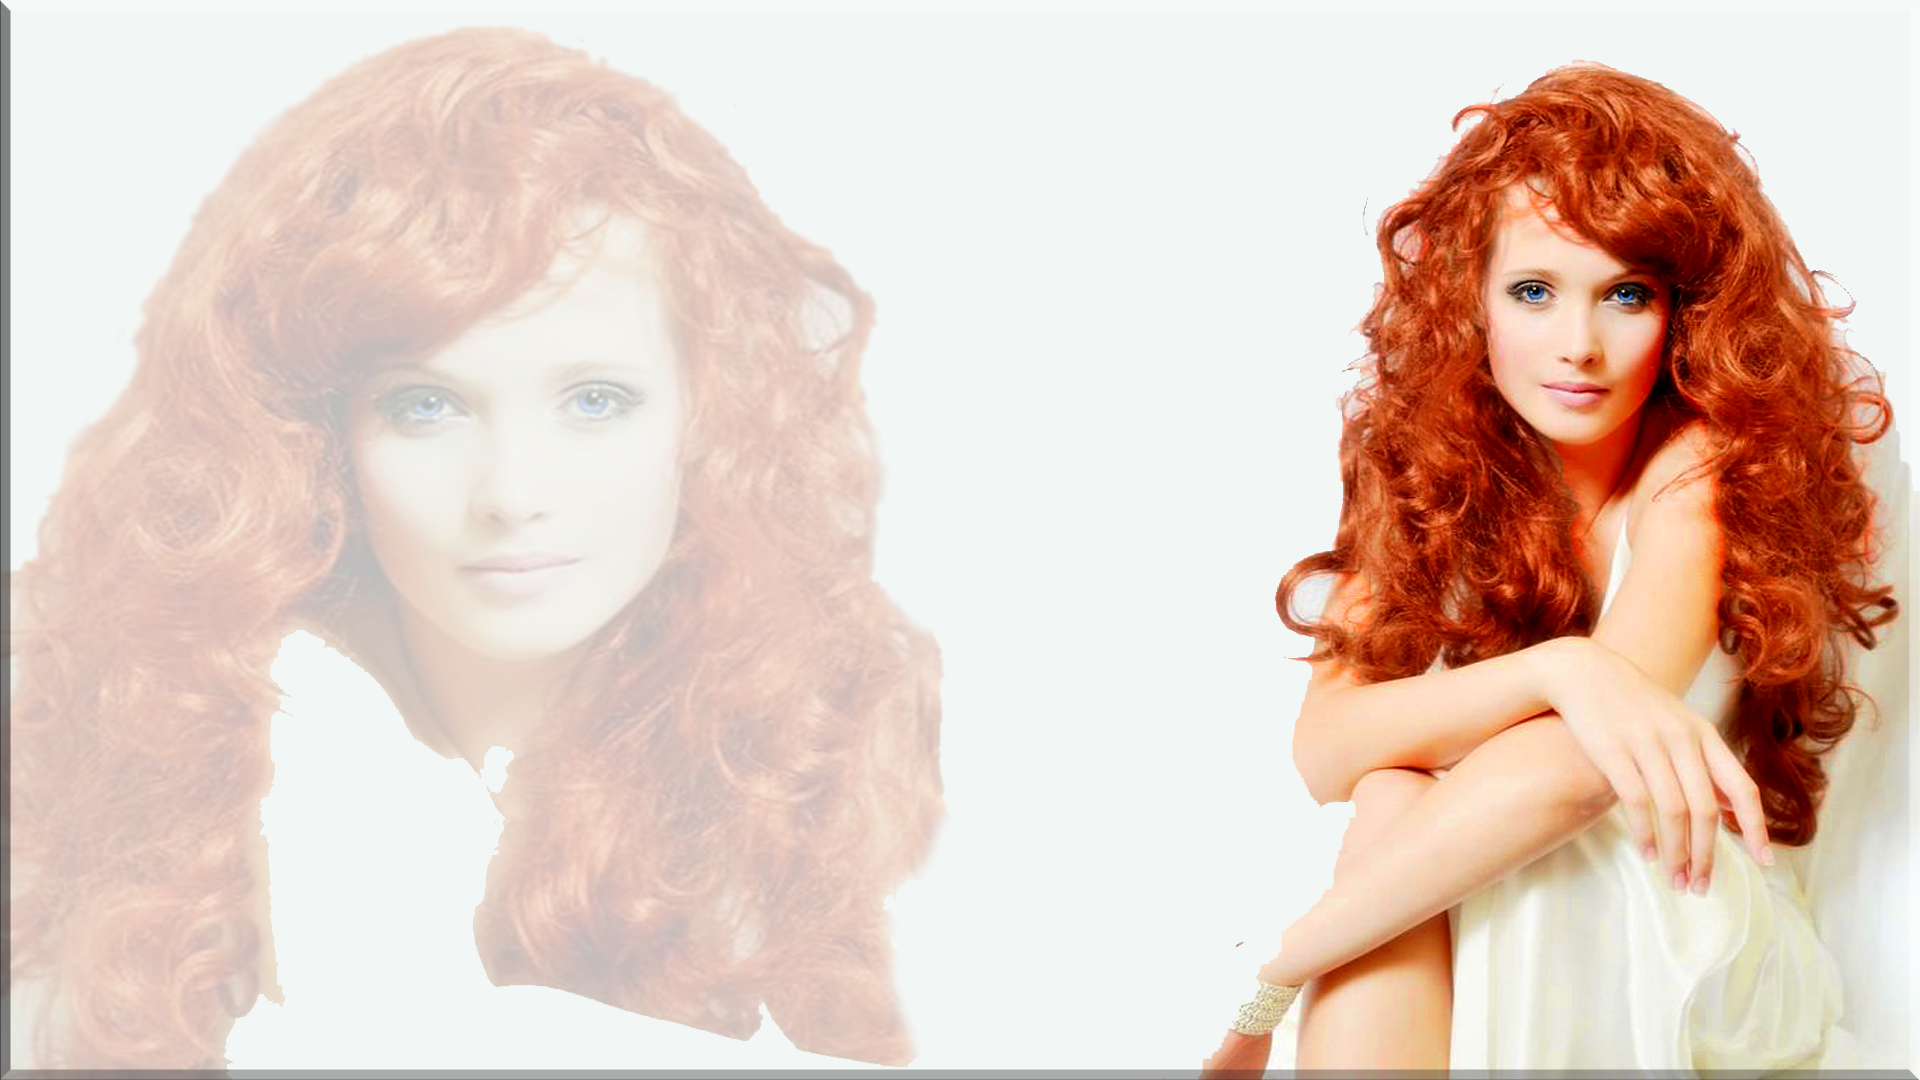 Beautiful Redhead Puter Wallpaper Desktop Background